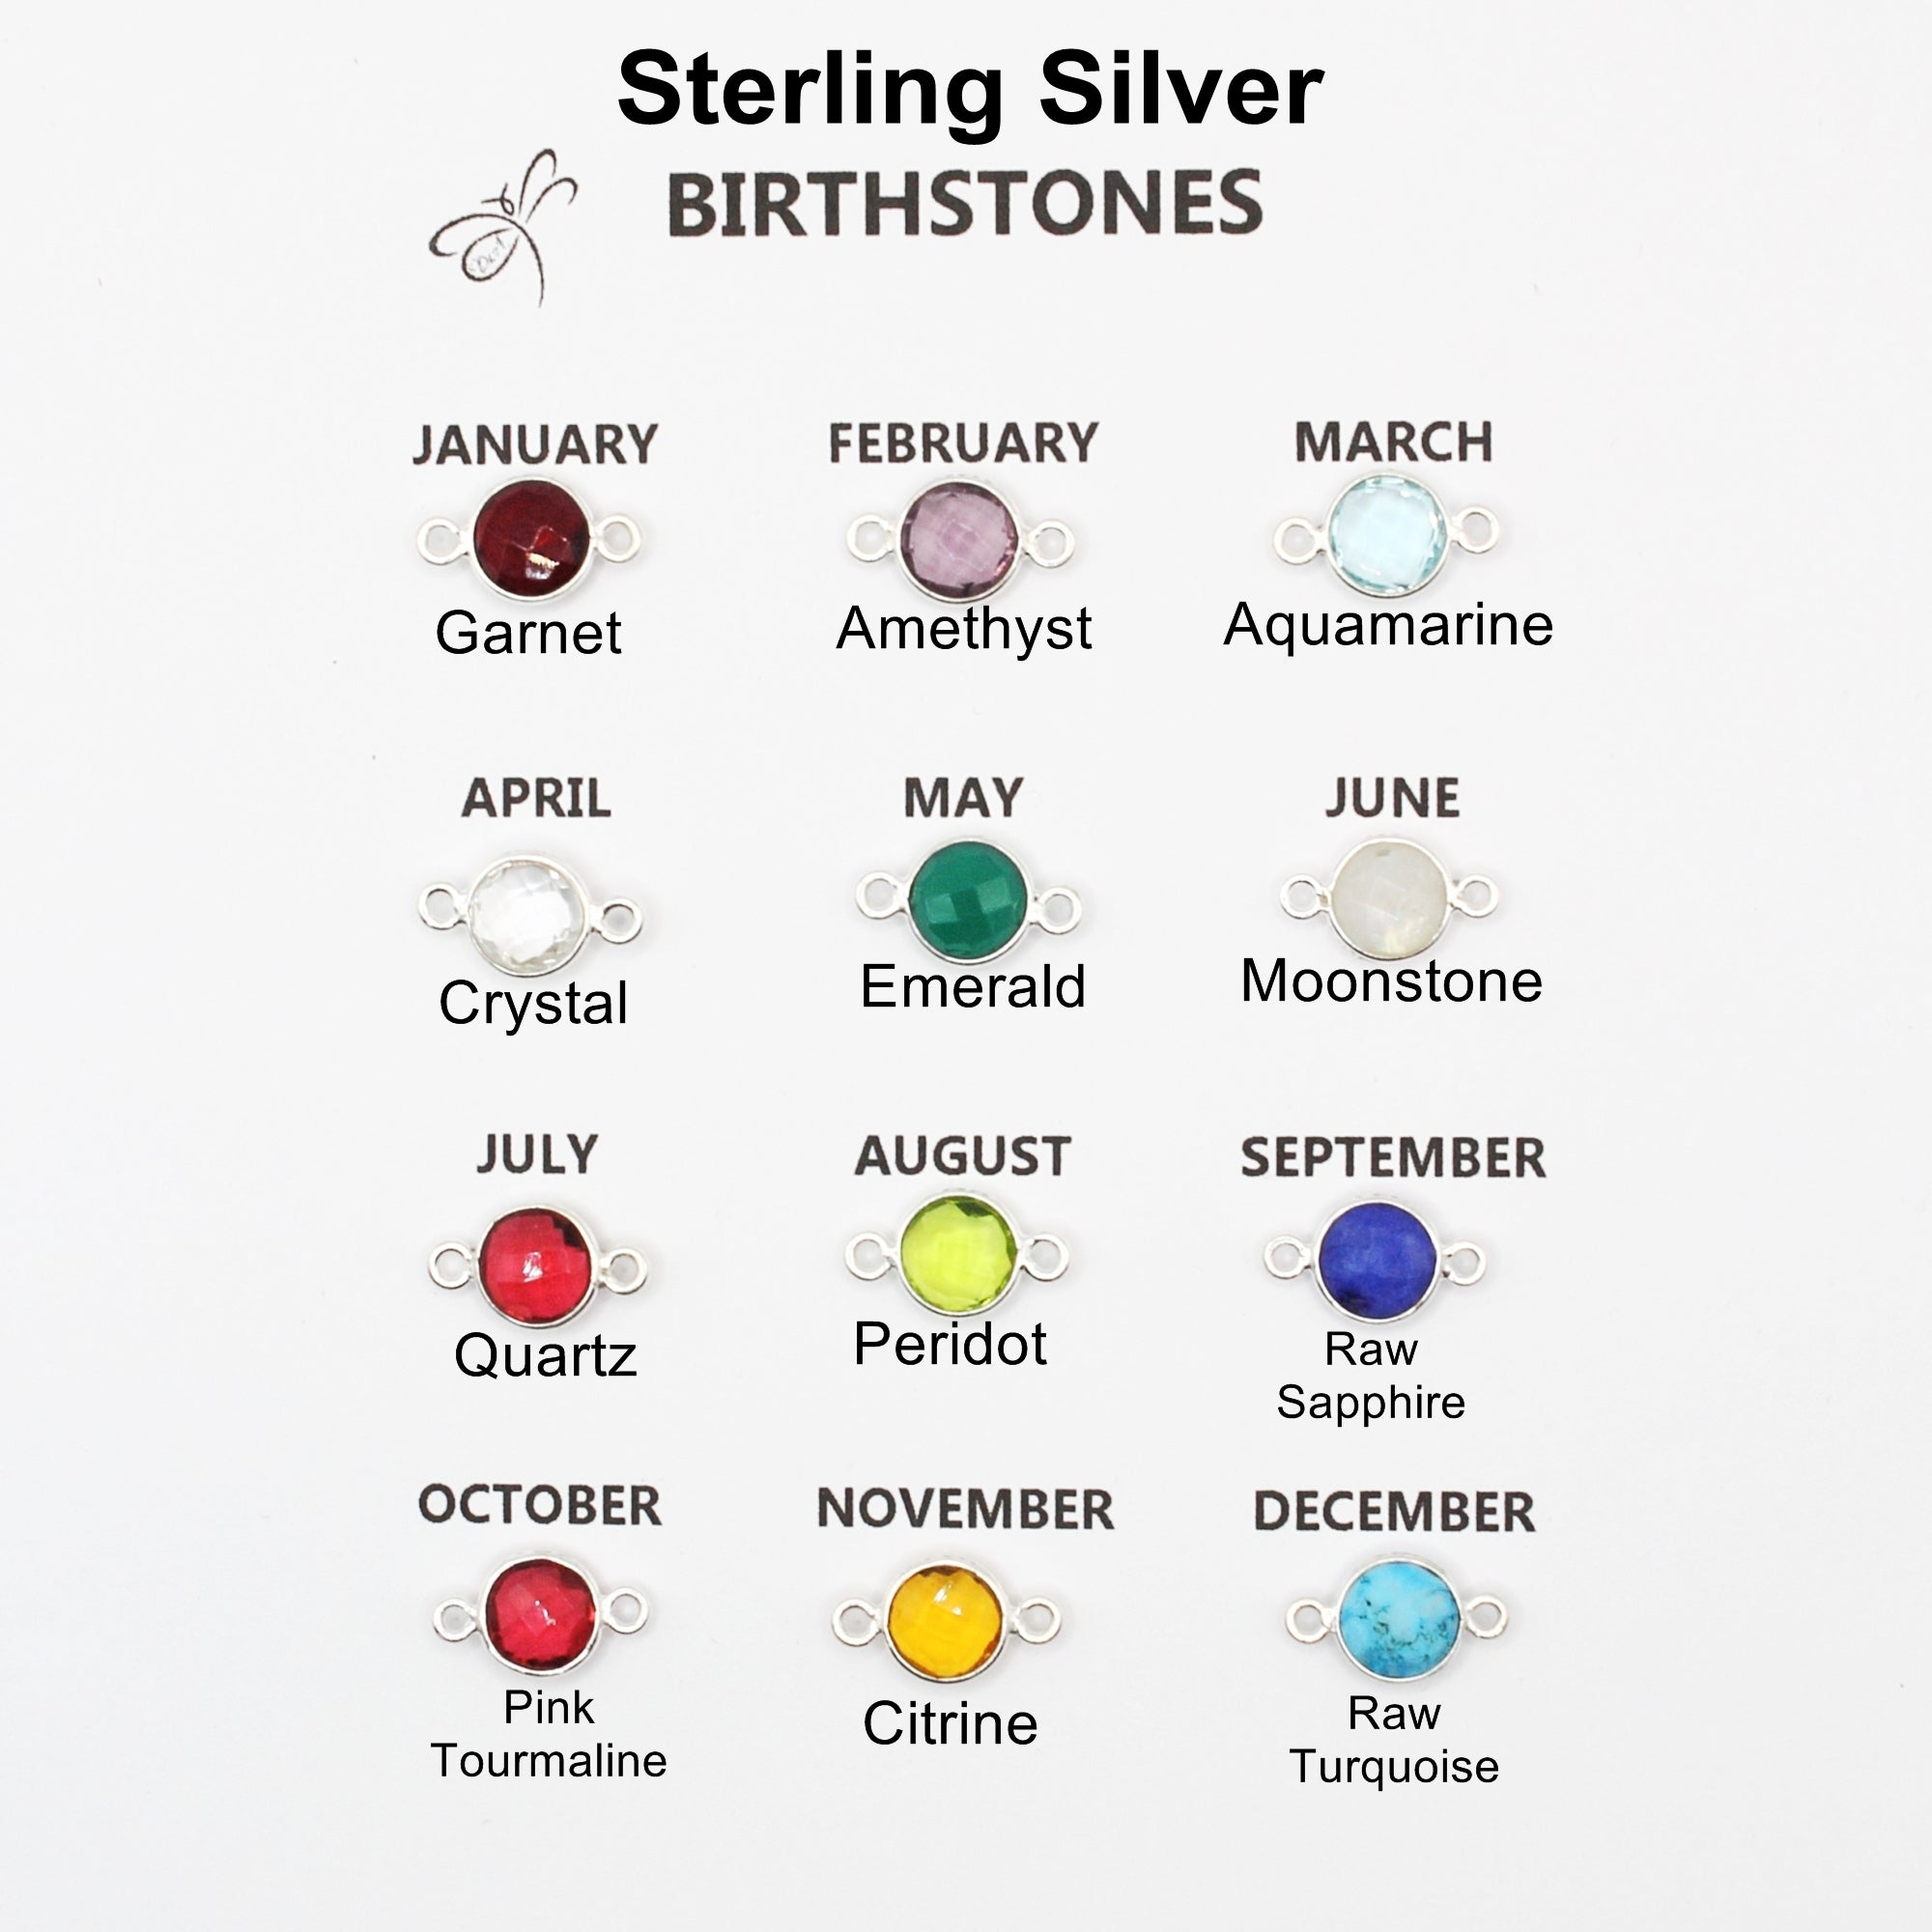 Center Birthstone Body Chain in Sterling Silver